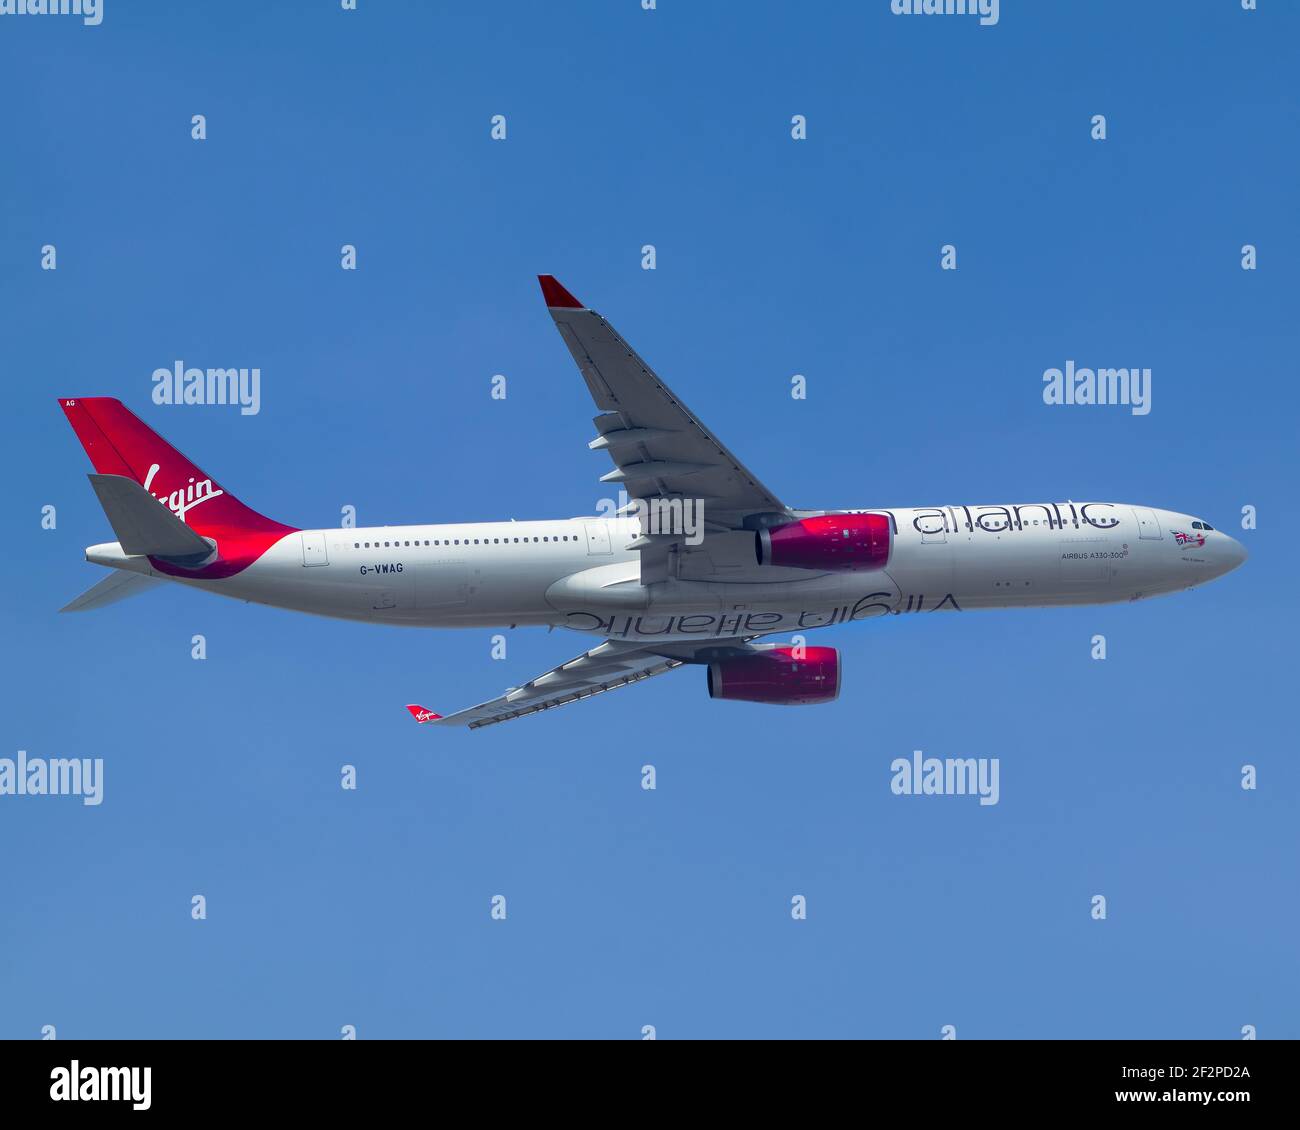 London, Heathrow Airport - Jan 05, 2020: Virgin Atlantic, Airbus A330 taking off for Washington on runway 27R Stock Photo